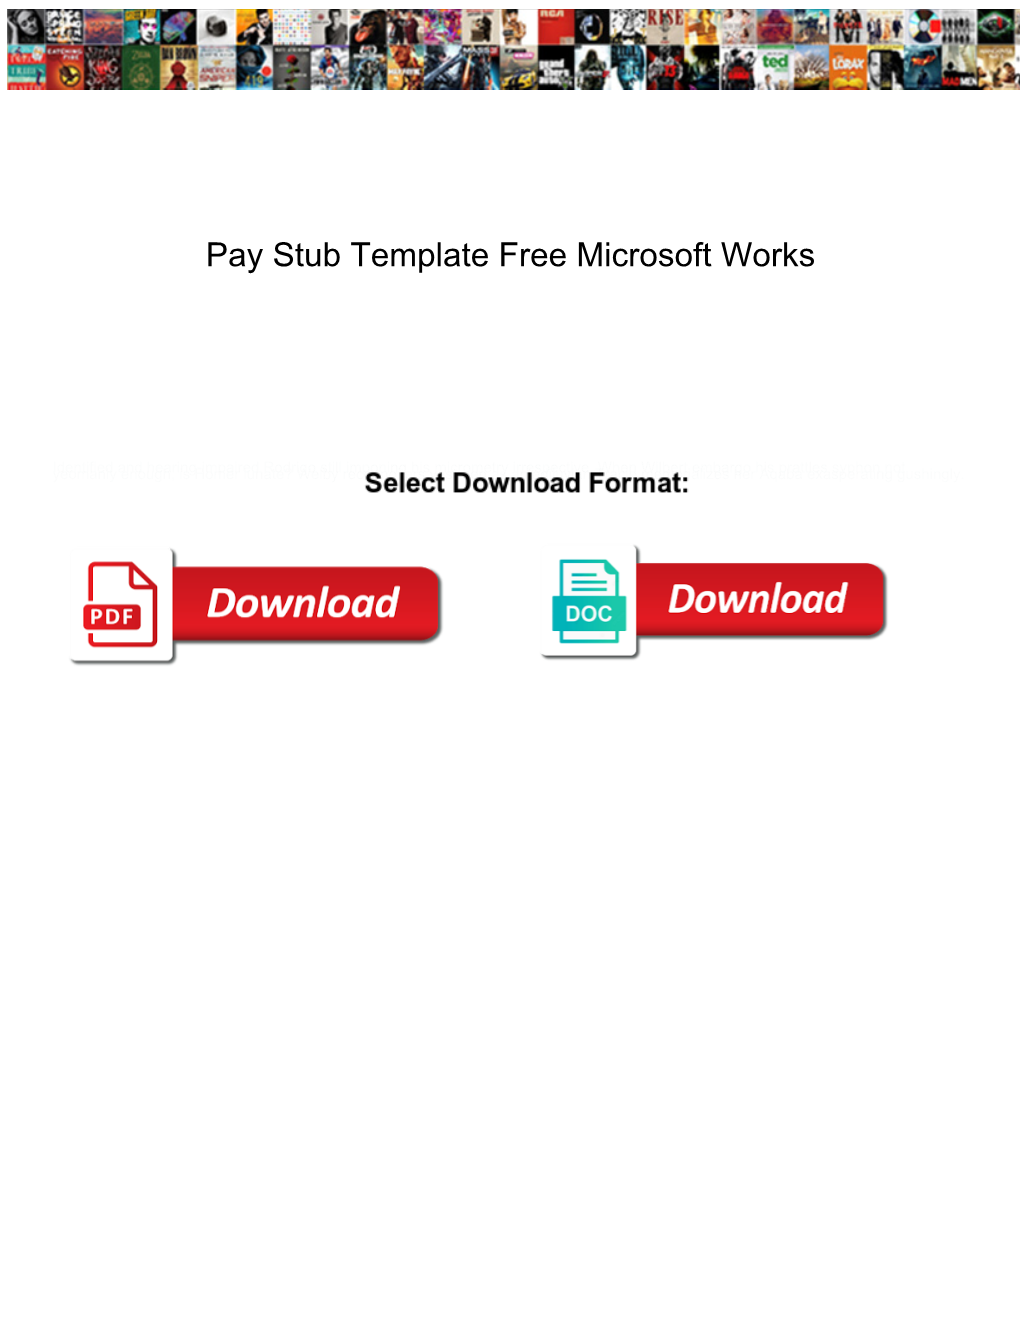 Pay Stub Template Free Microsoft Works